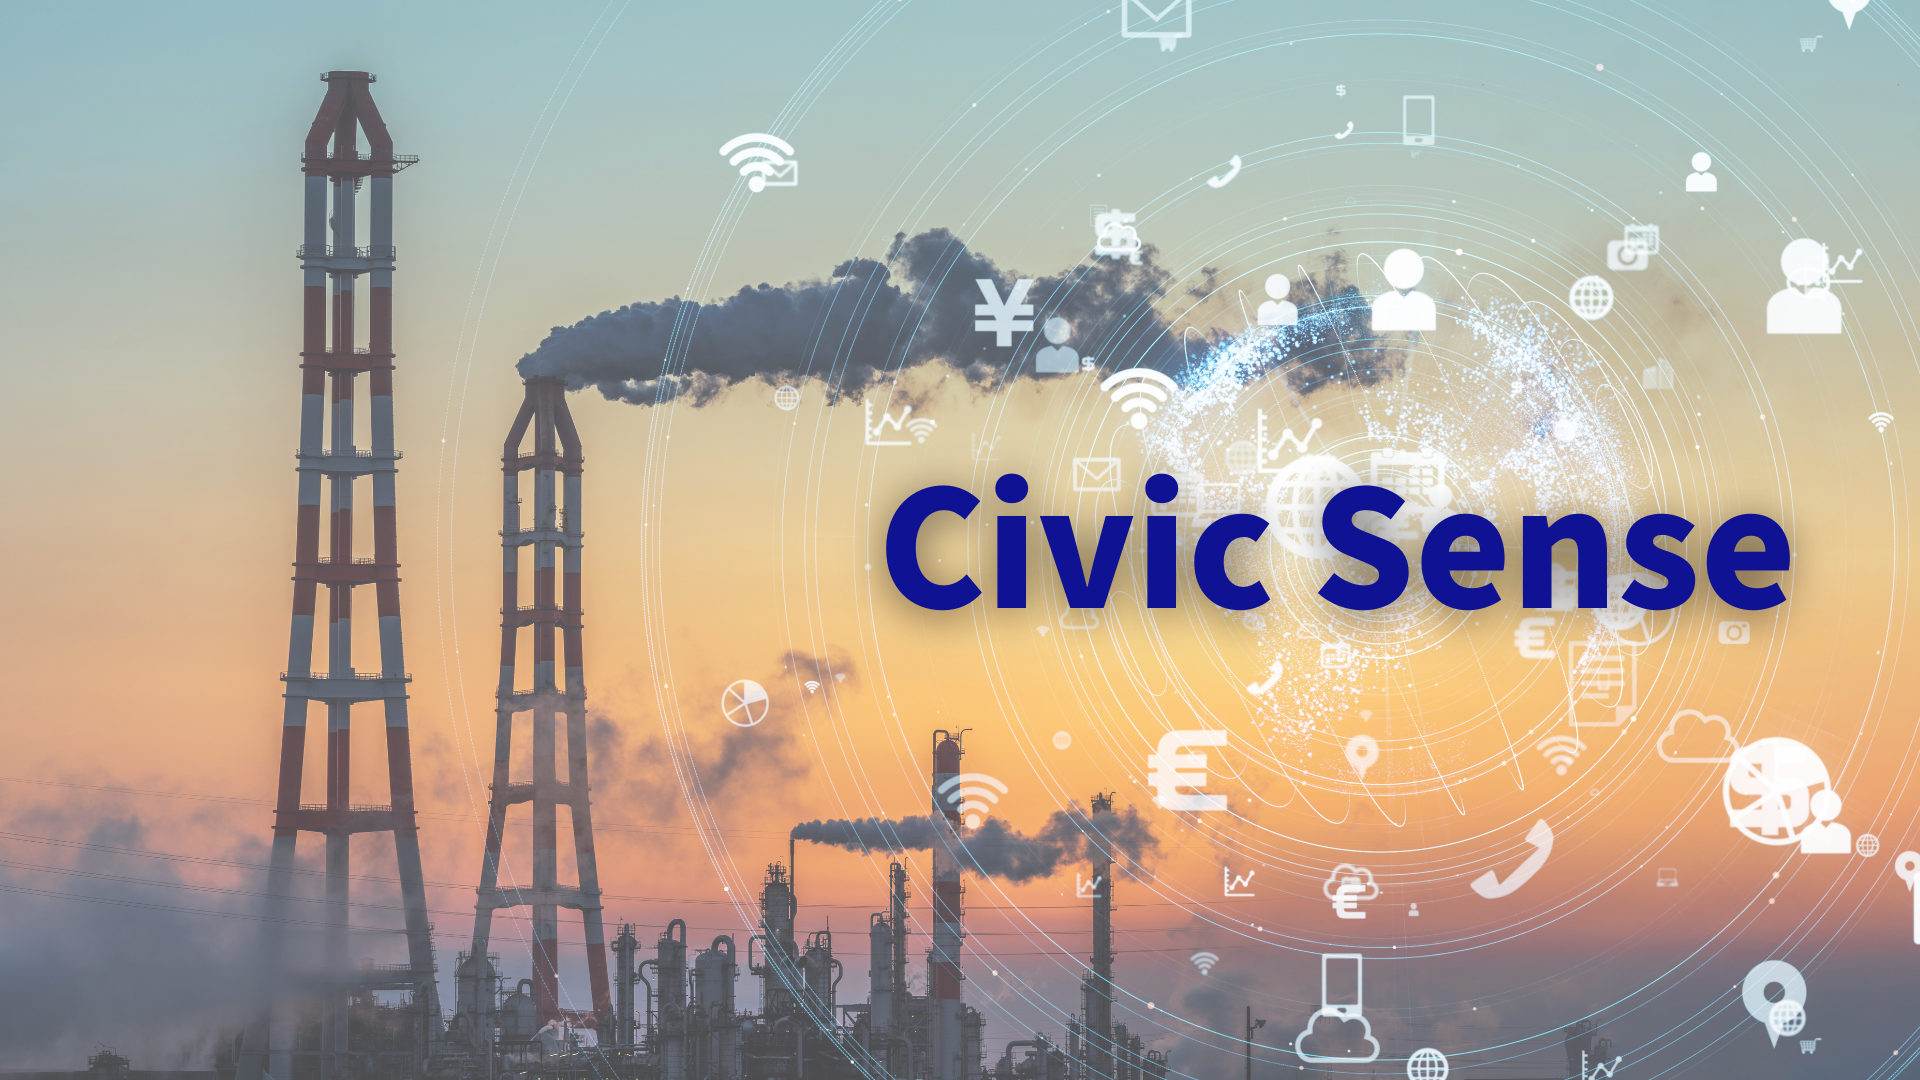 Visual identity image for 'Civic Sense'